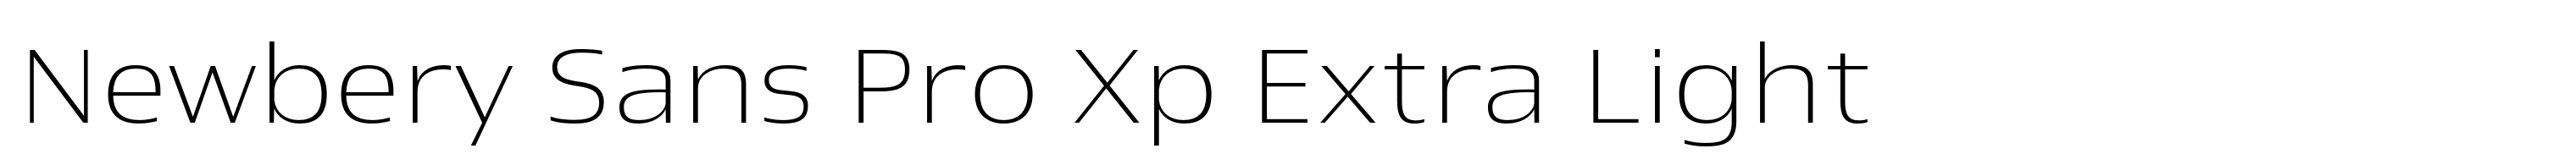 Newbery Sans Pro Xp Extra Light